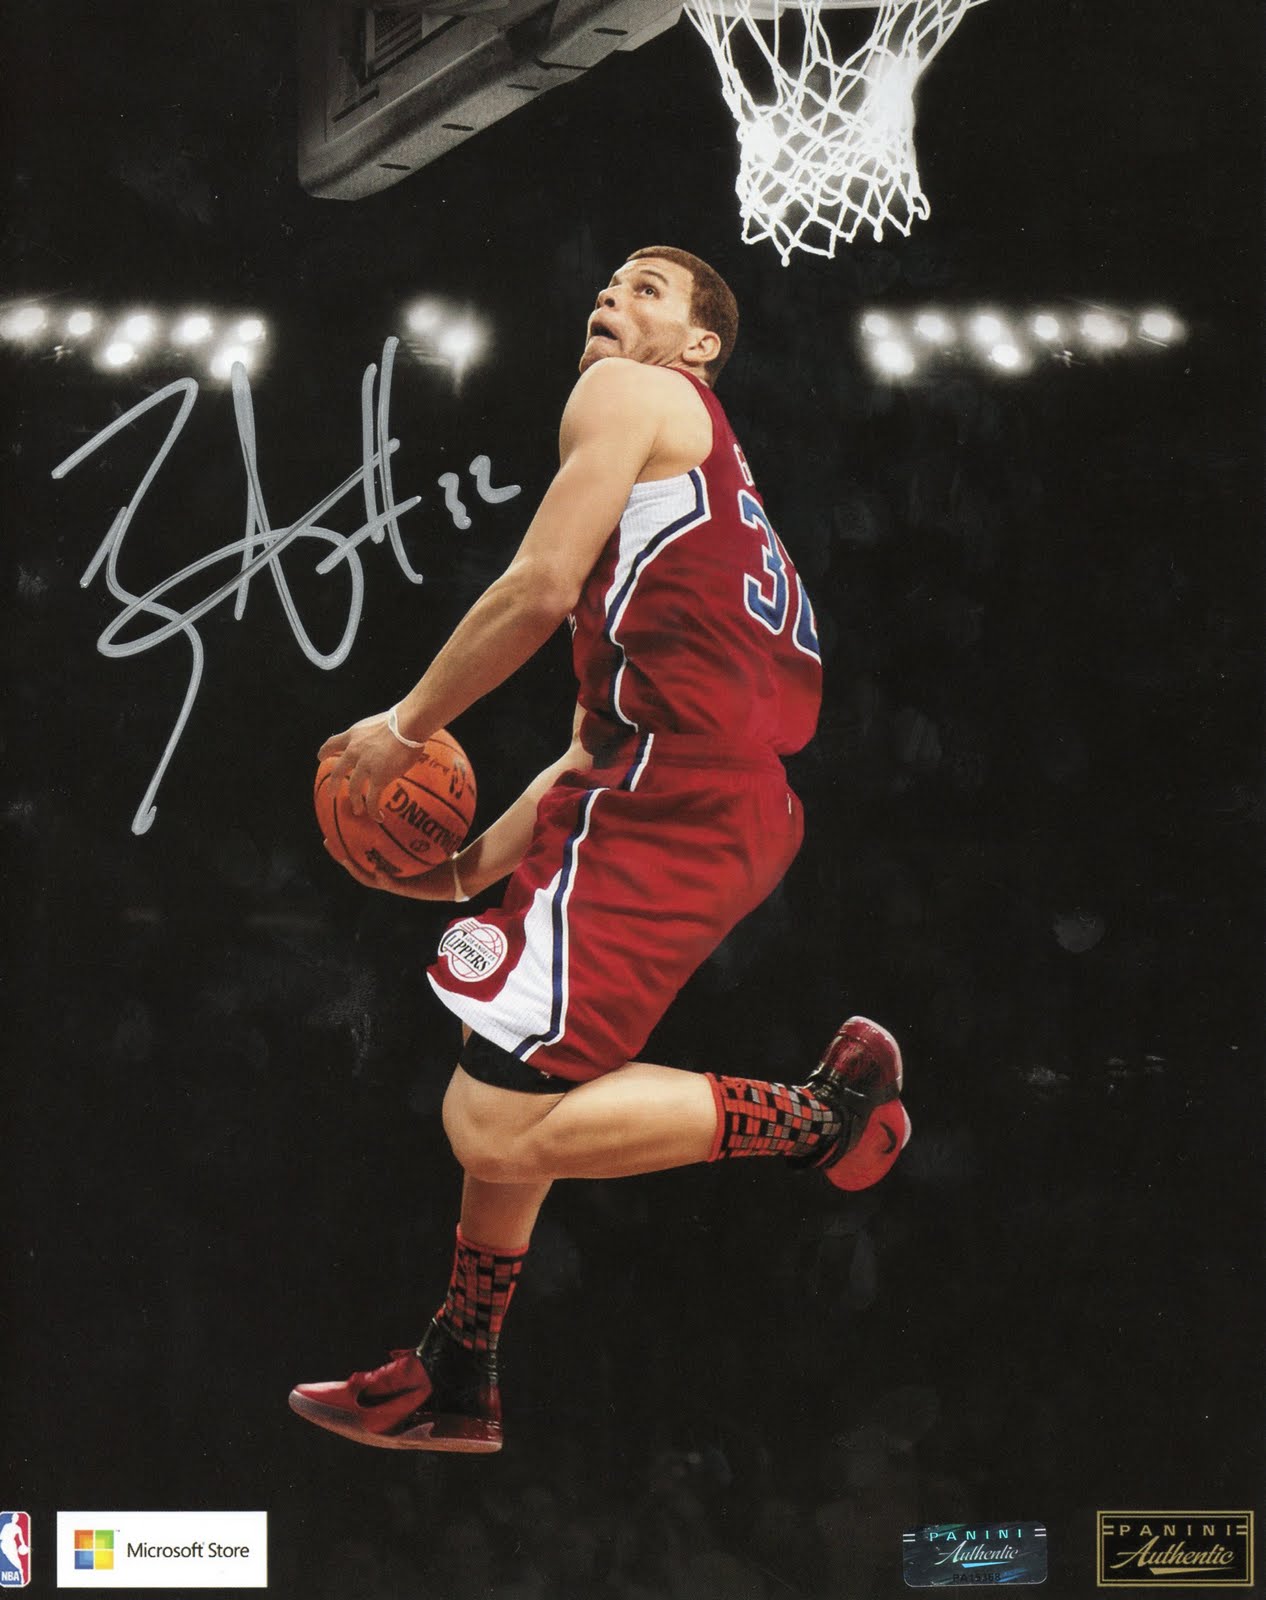 fondo de pantalla de blake griffin,jugador de baloncesto,movimientos de baloncesto,parafernalia autografiada de baloncesto,baloncesto,clavada